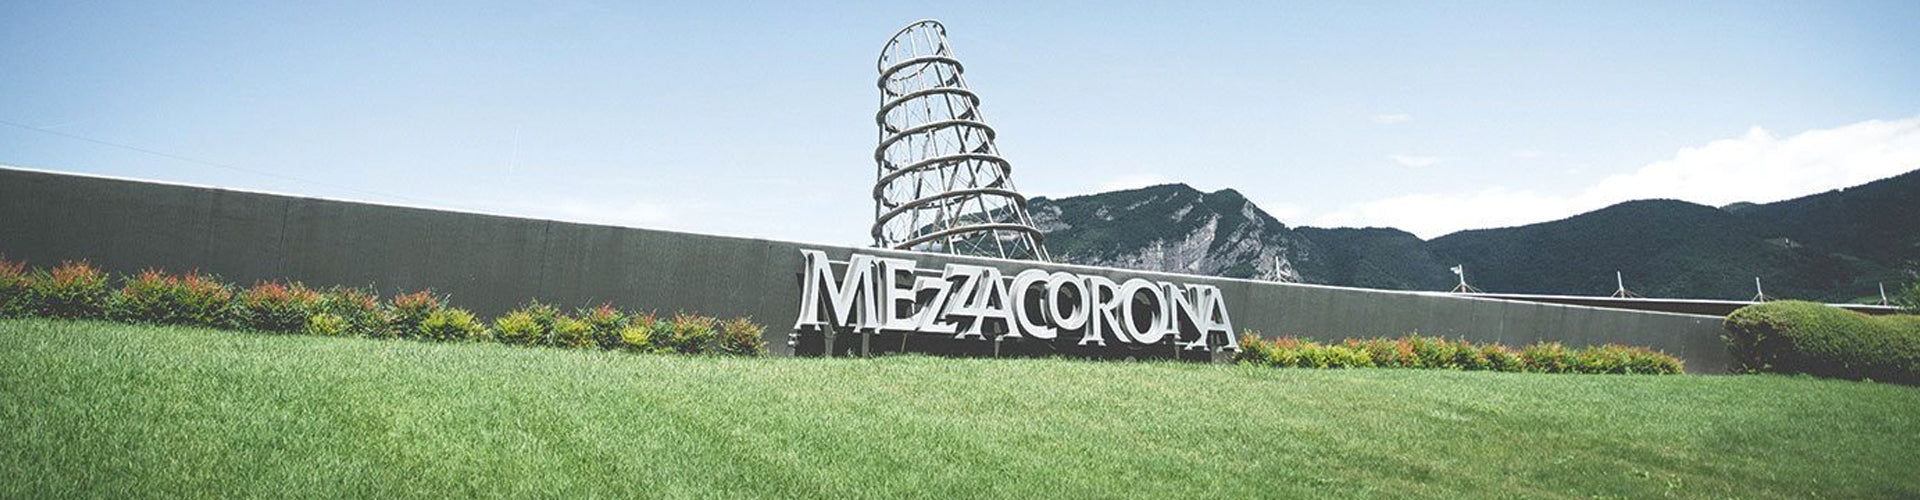 Mezzacorona State-of-the-Art Winery in Trentino, North Italy